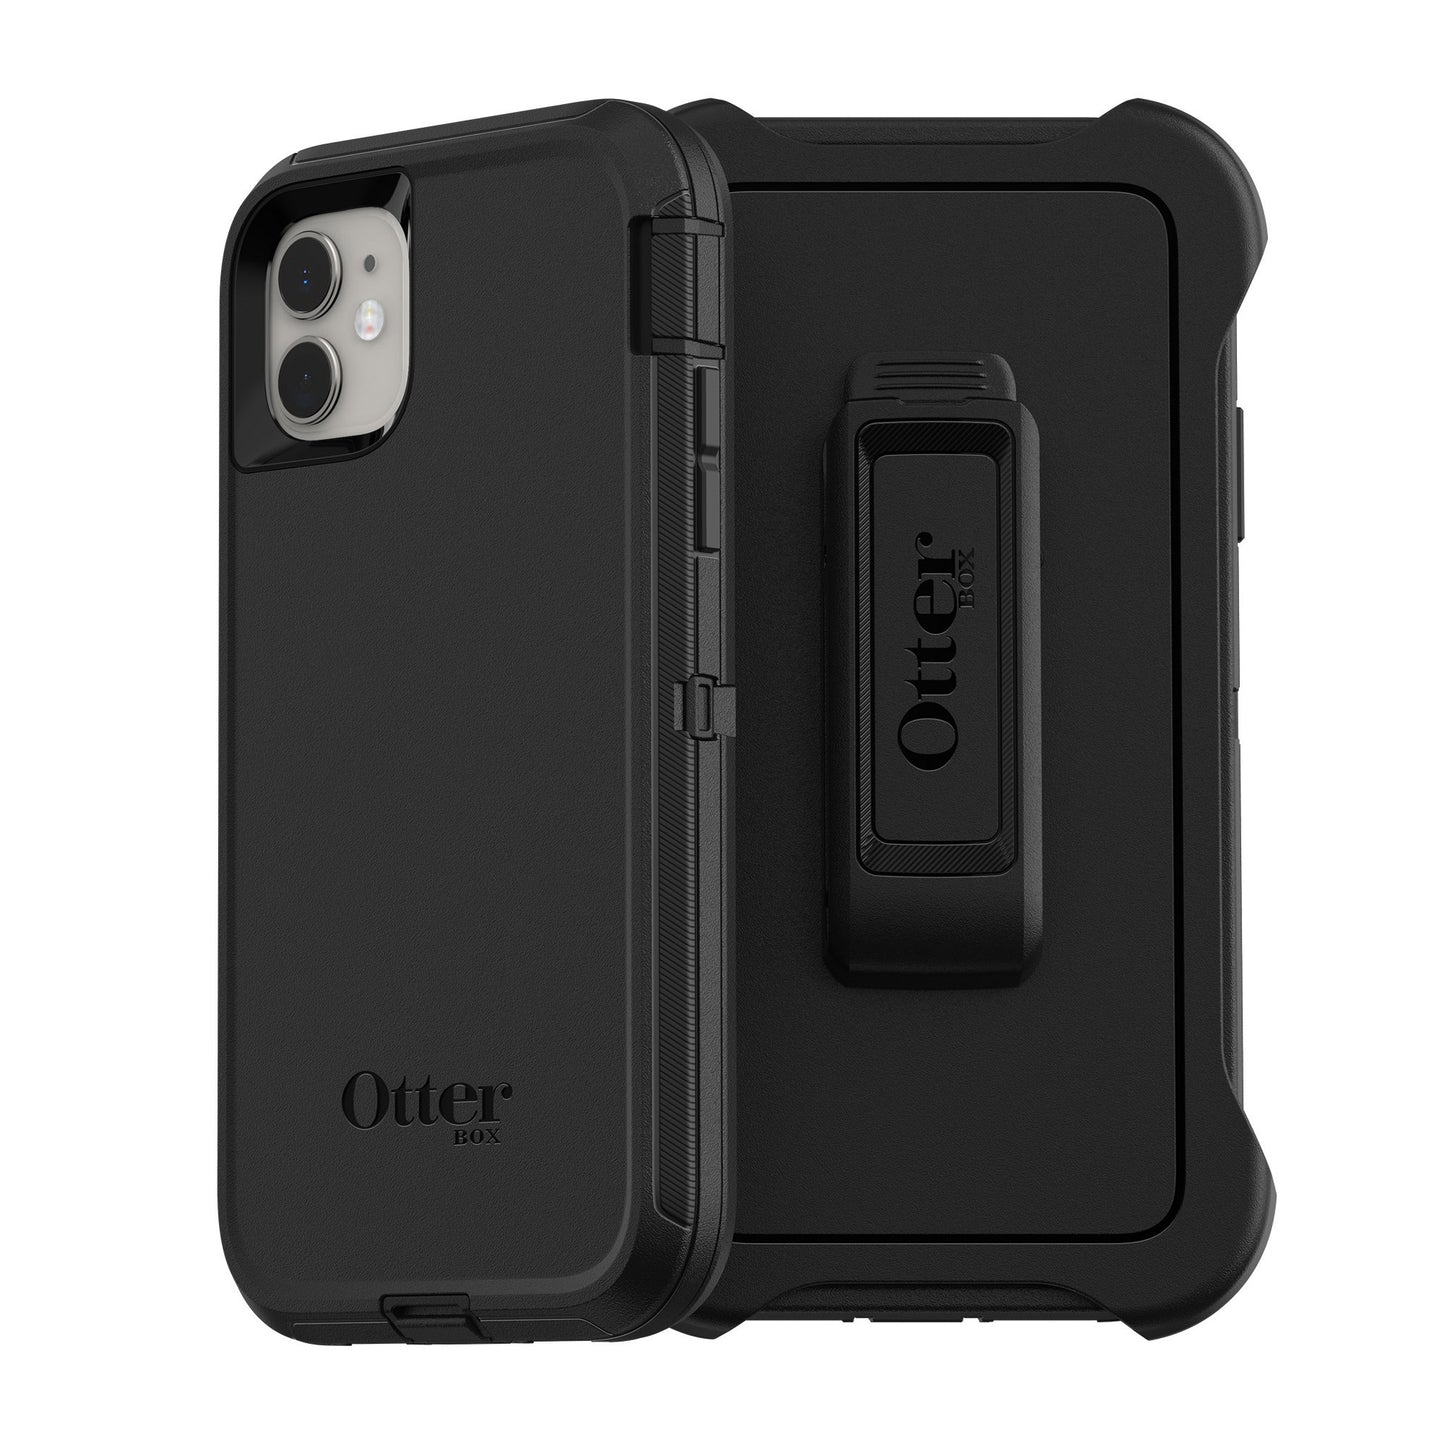 iPhone 11/XR Otterbox Black Defender Series Case - 15-05122